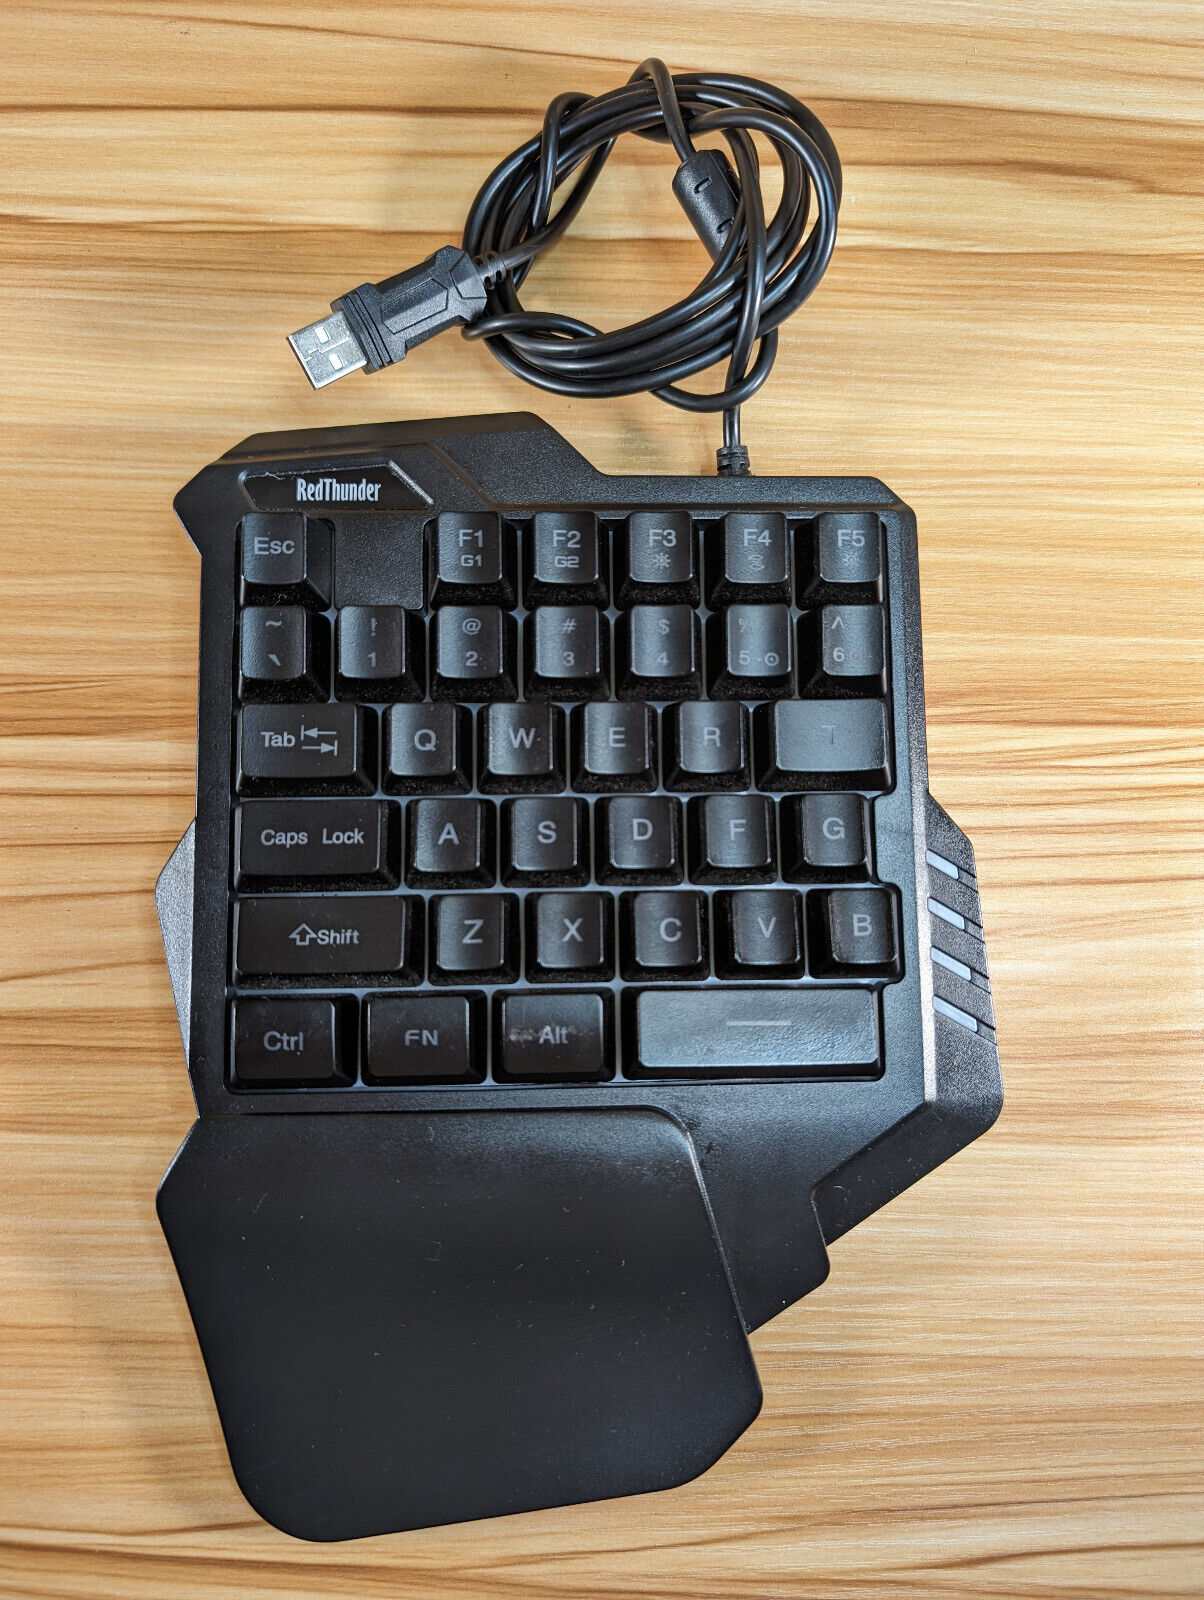 RedThunder G30 Gaming One-Handed Keyboard